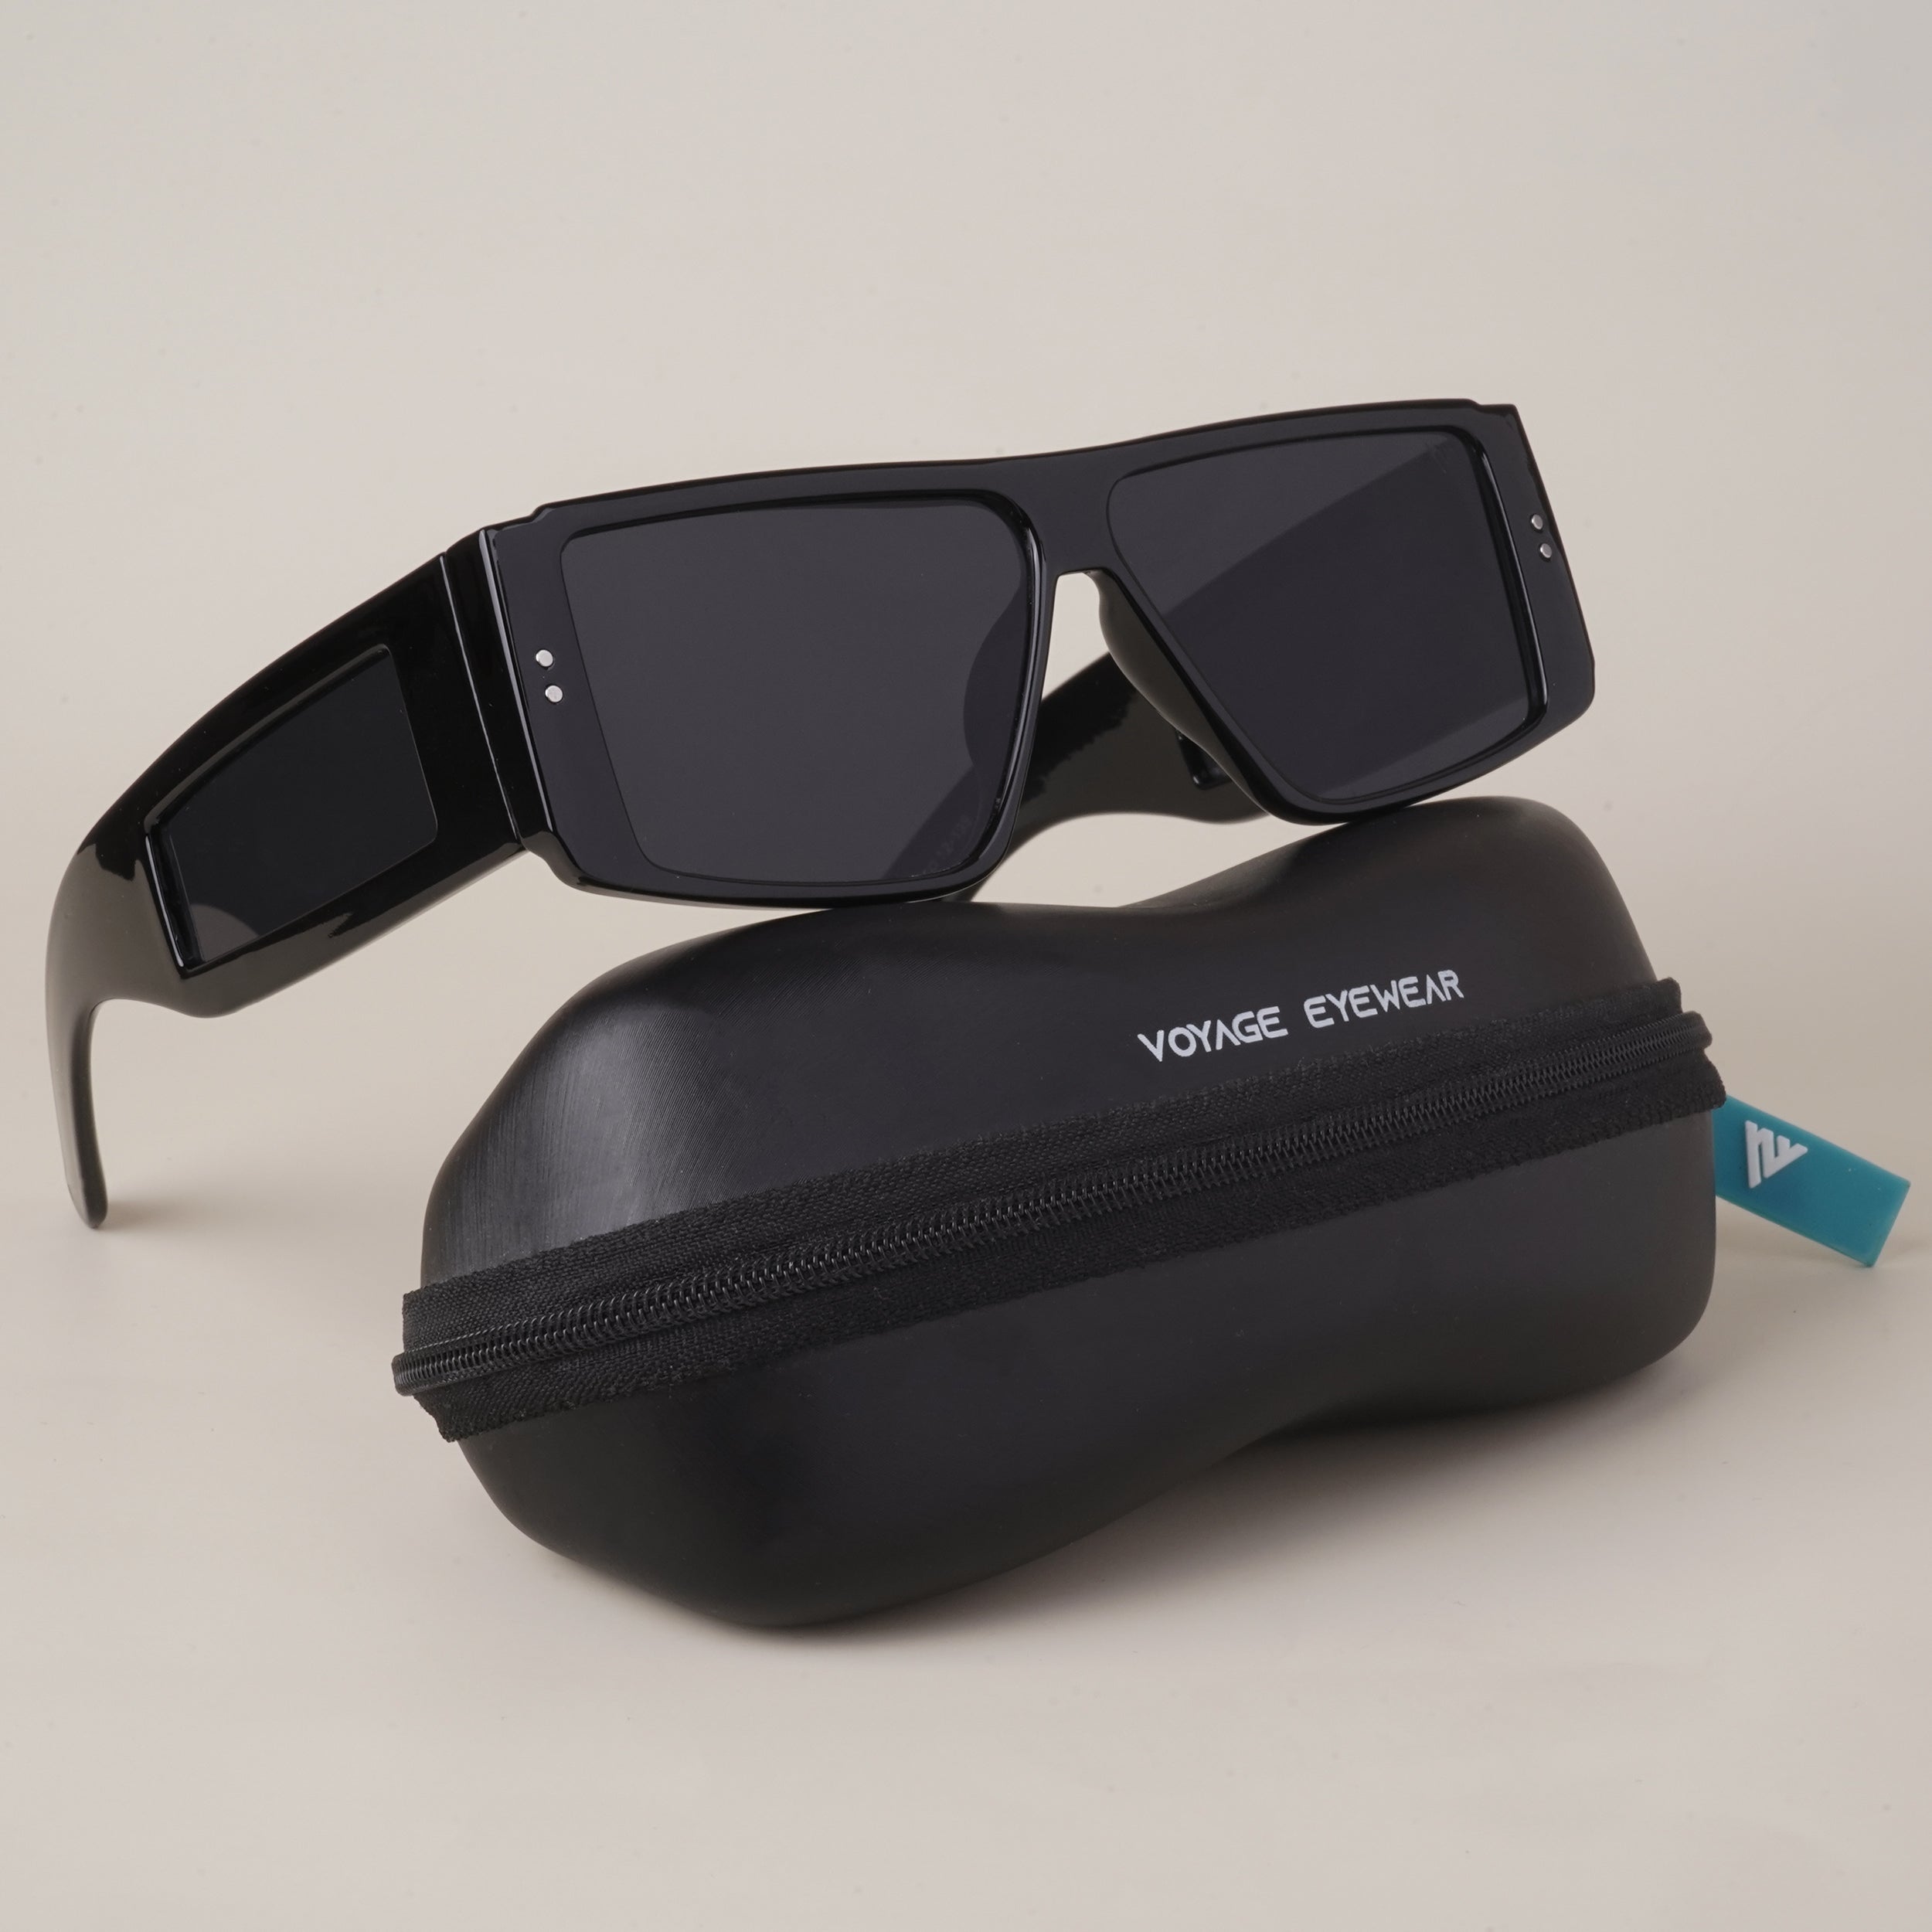 Voyage Black Wayfarer Sunglasses MG3706